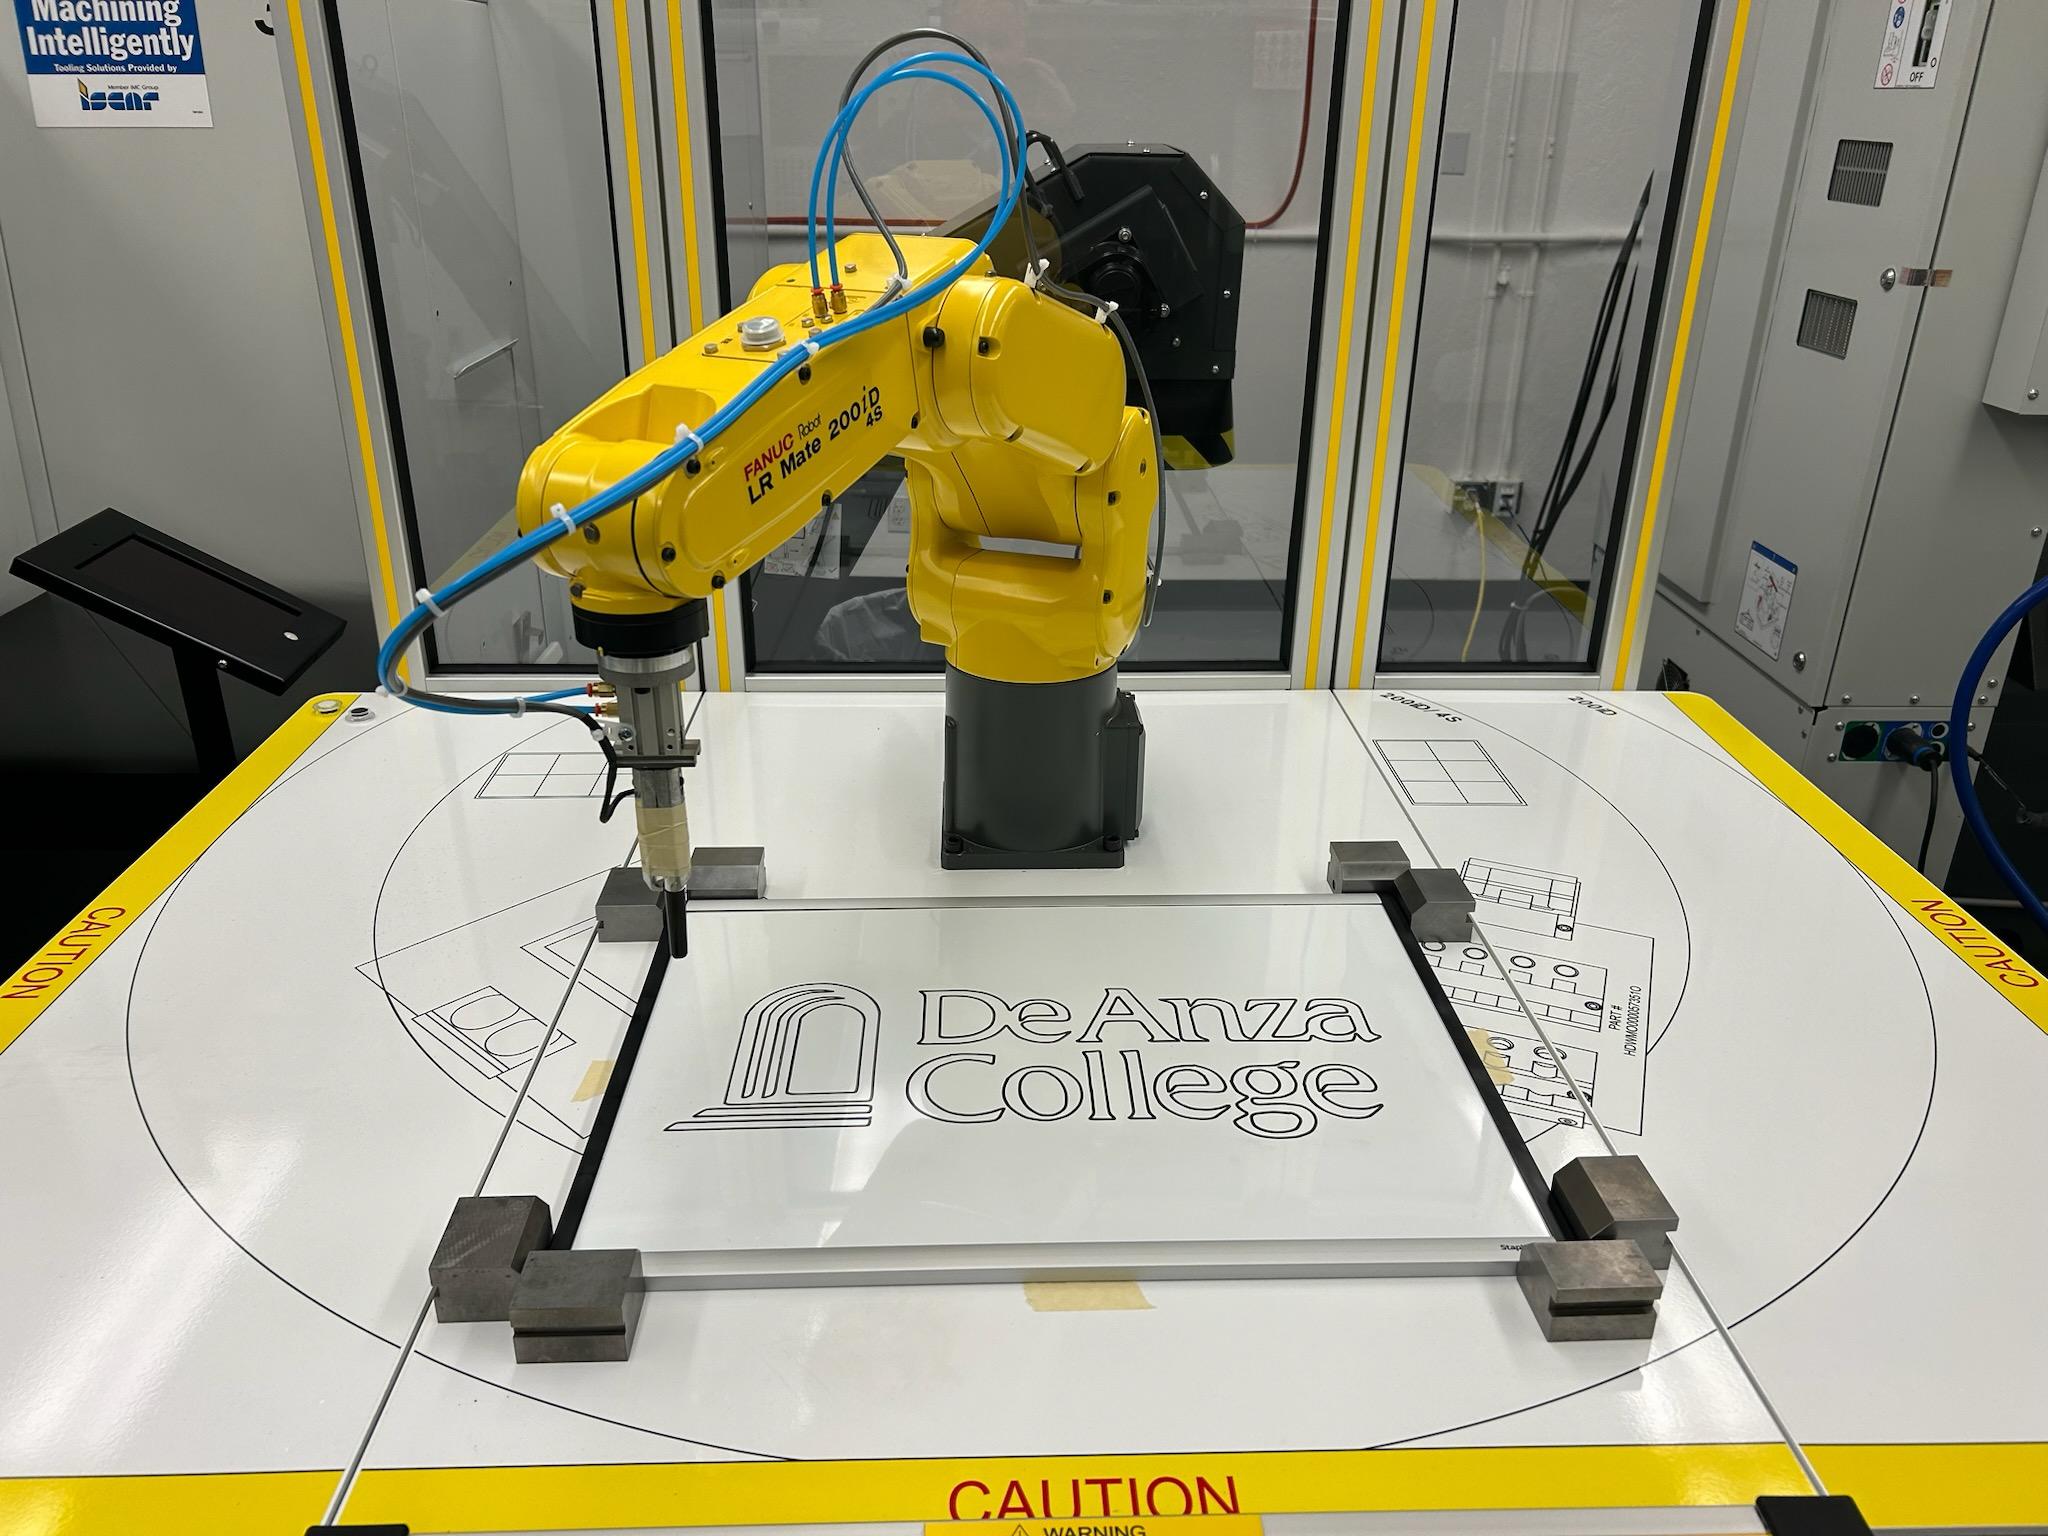 FANUC Robot LR Mate CAD to Path